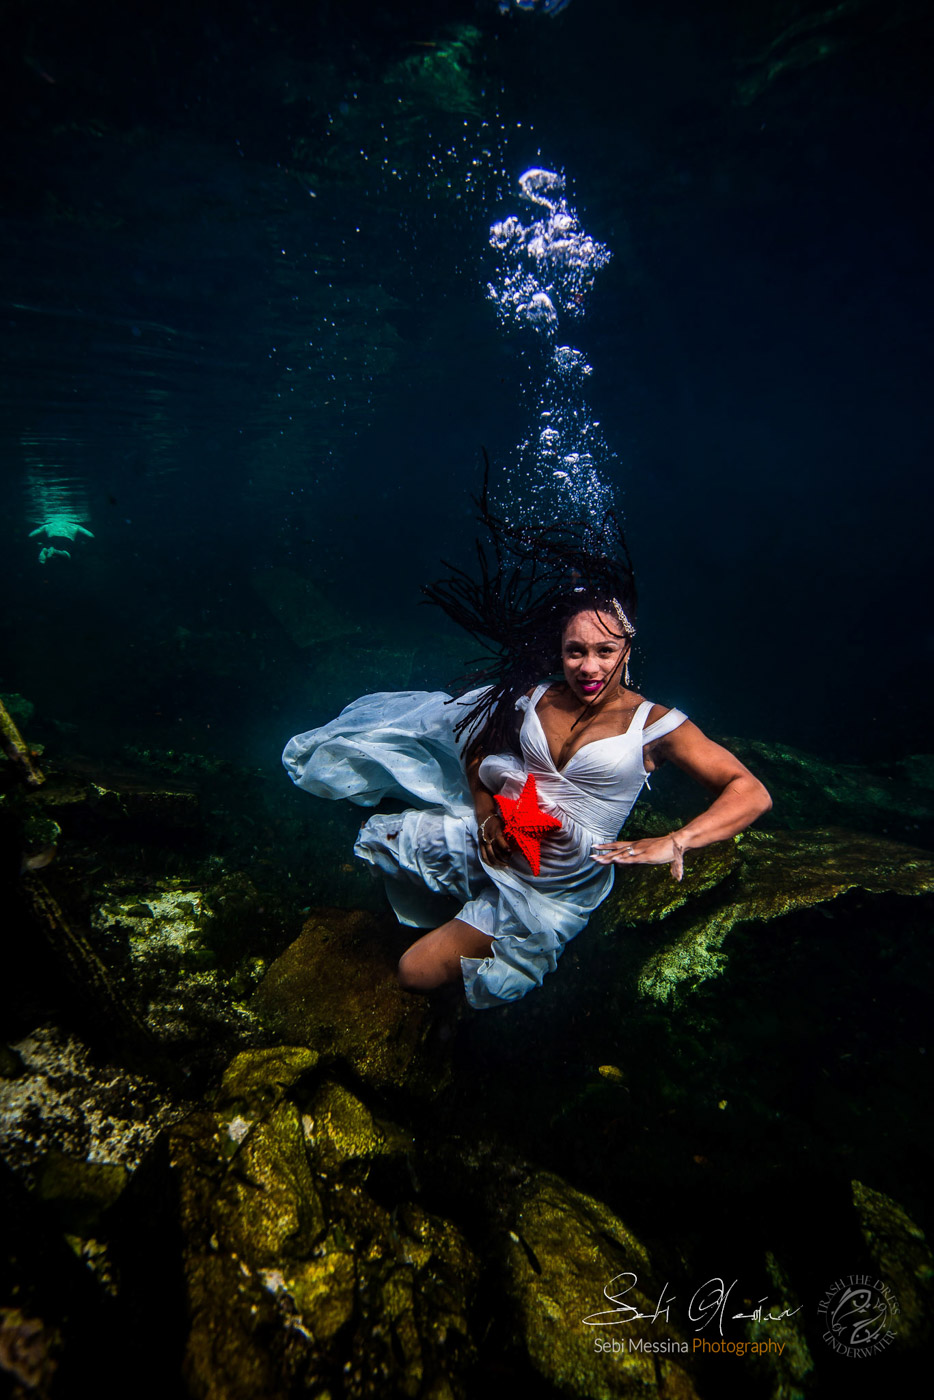 Trash The Dress Cancun - Sebi Messina Photography